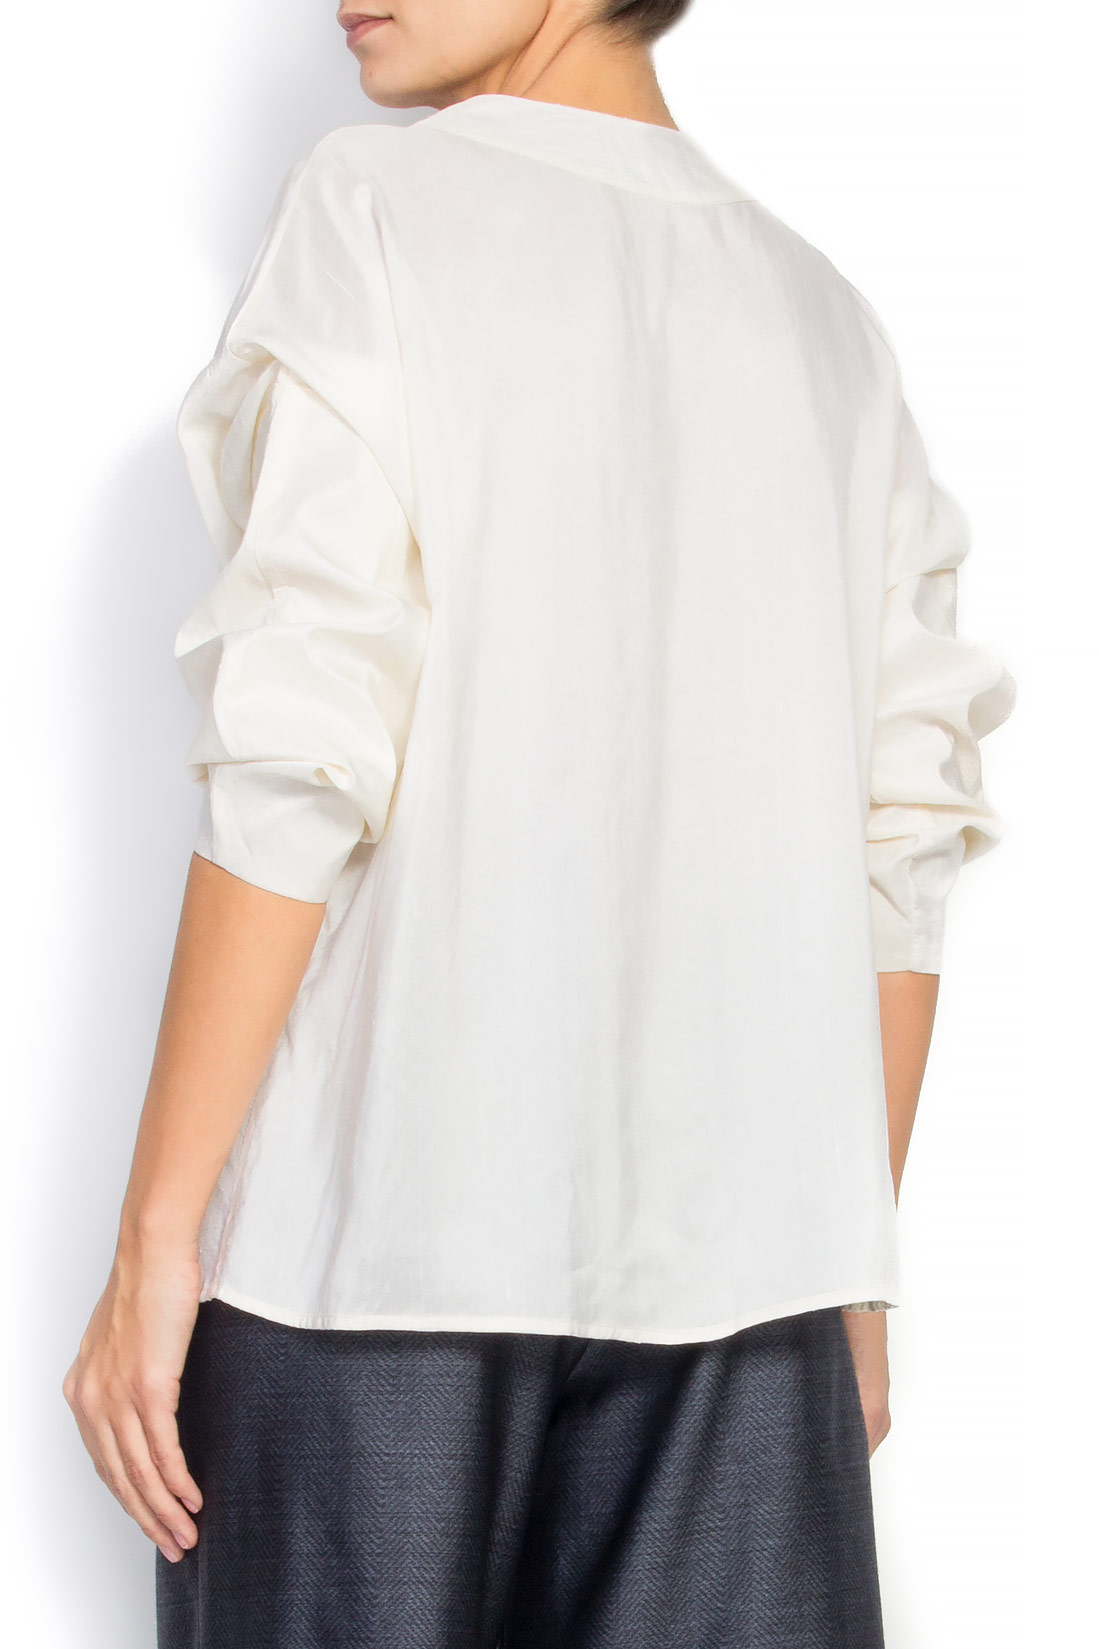 Silk blouse Daniela Barb image 2